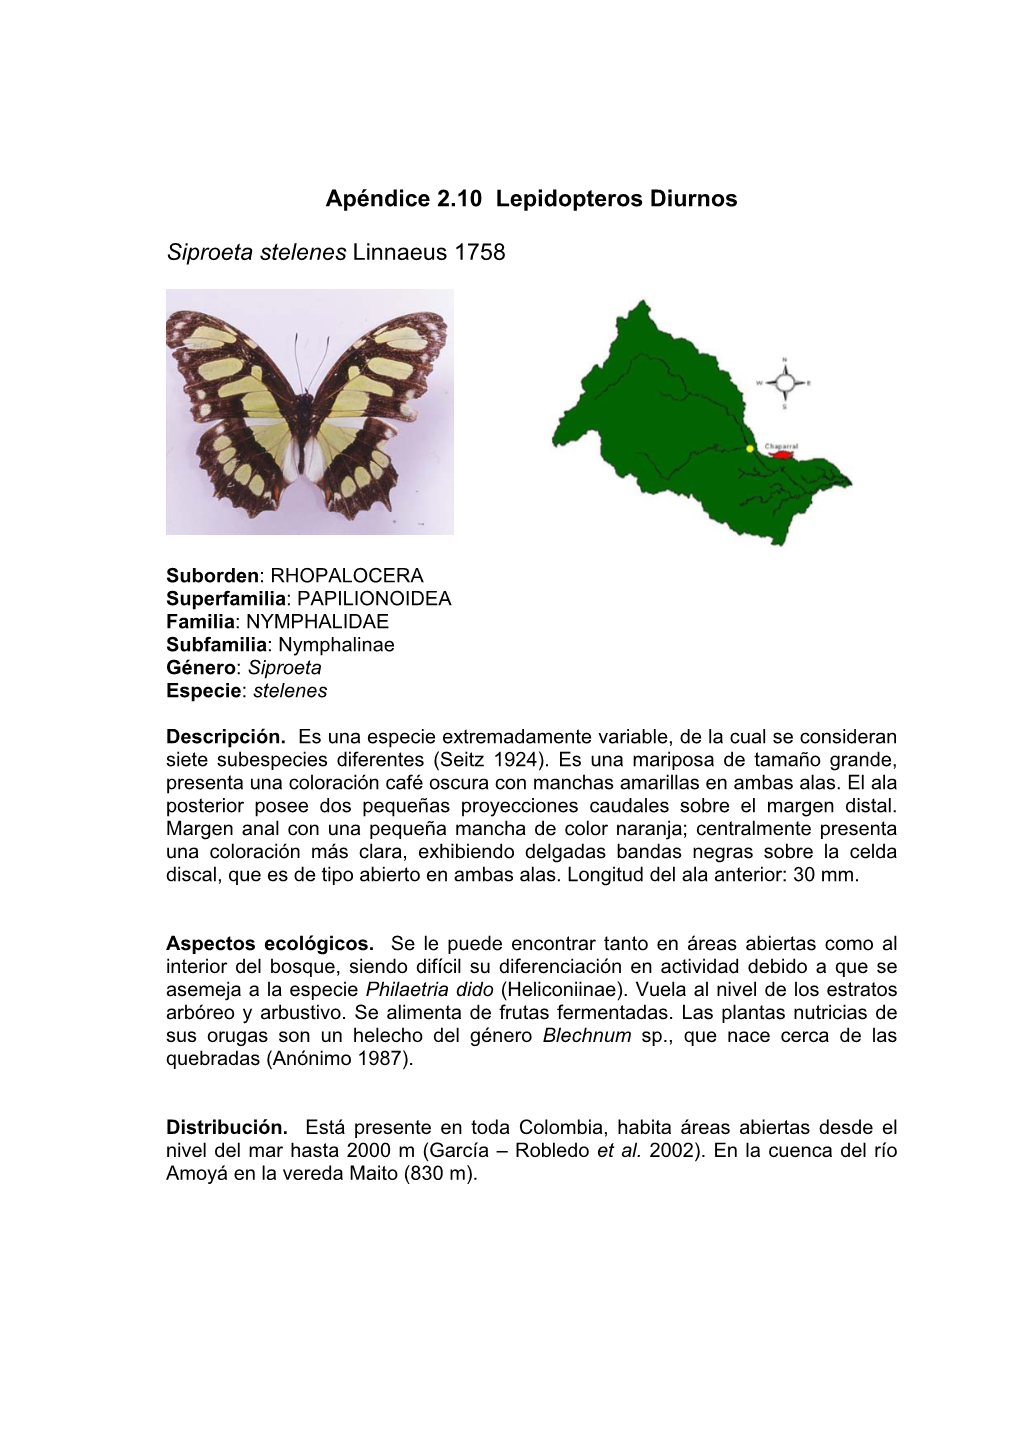 Apéndice 2.10 Lepidopteros Diurnos Siproeta Stelenes Linnaeus 1758